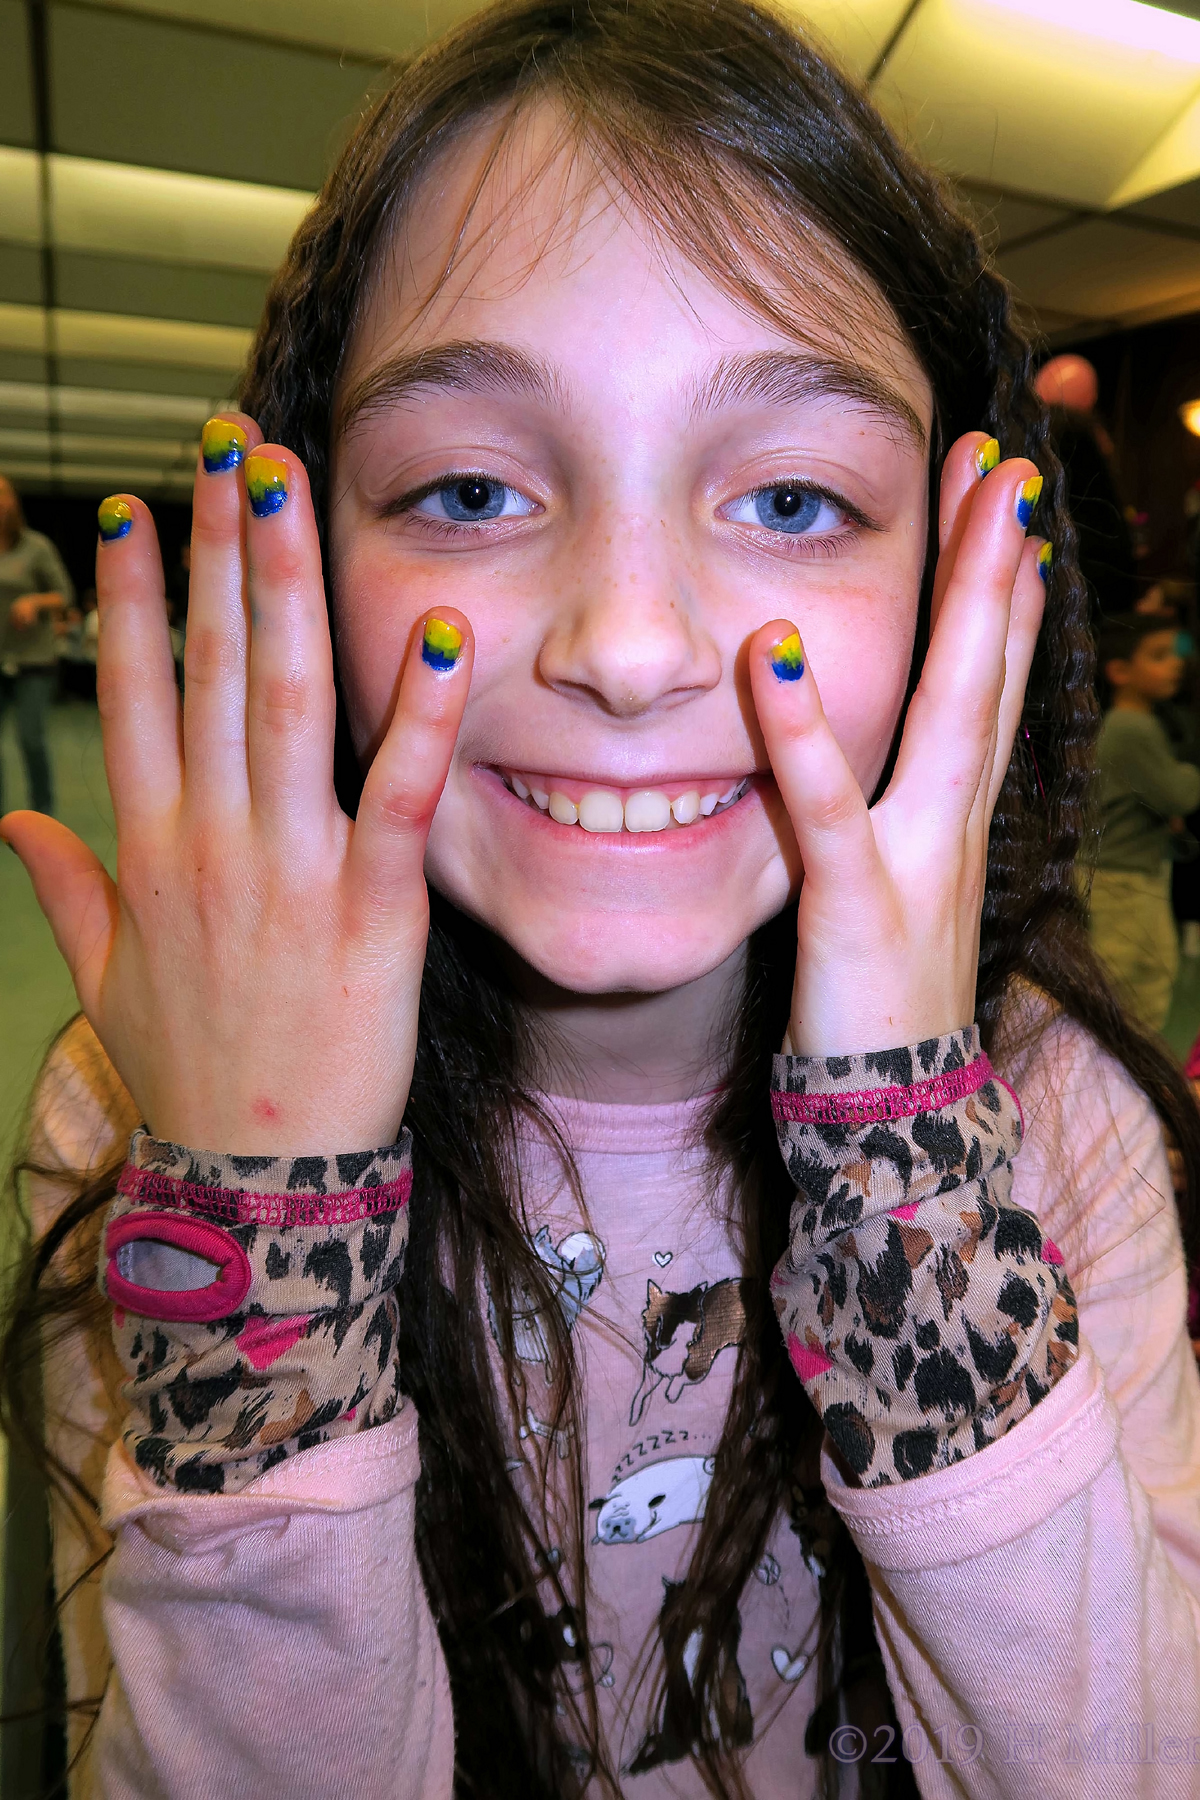 She Loves Her Ombre Nail Art Design On Her Mini Mani 